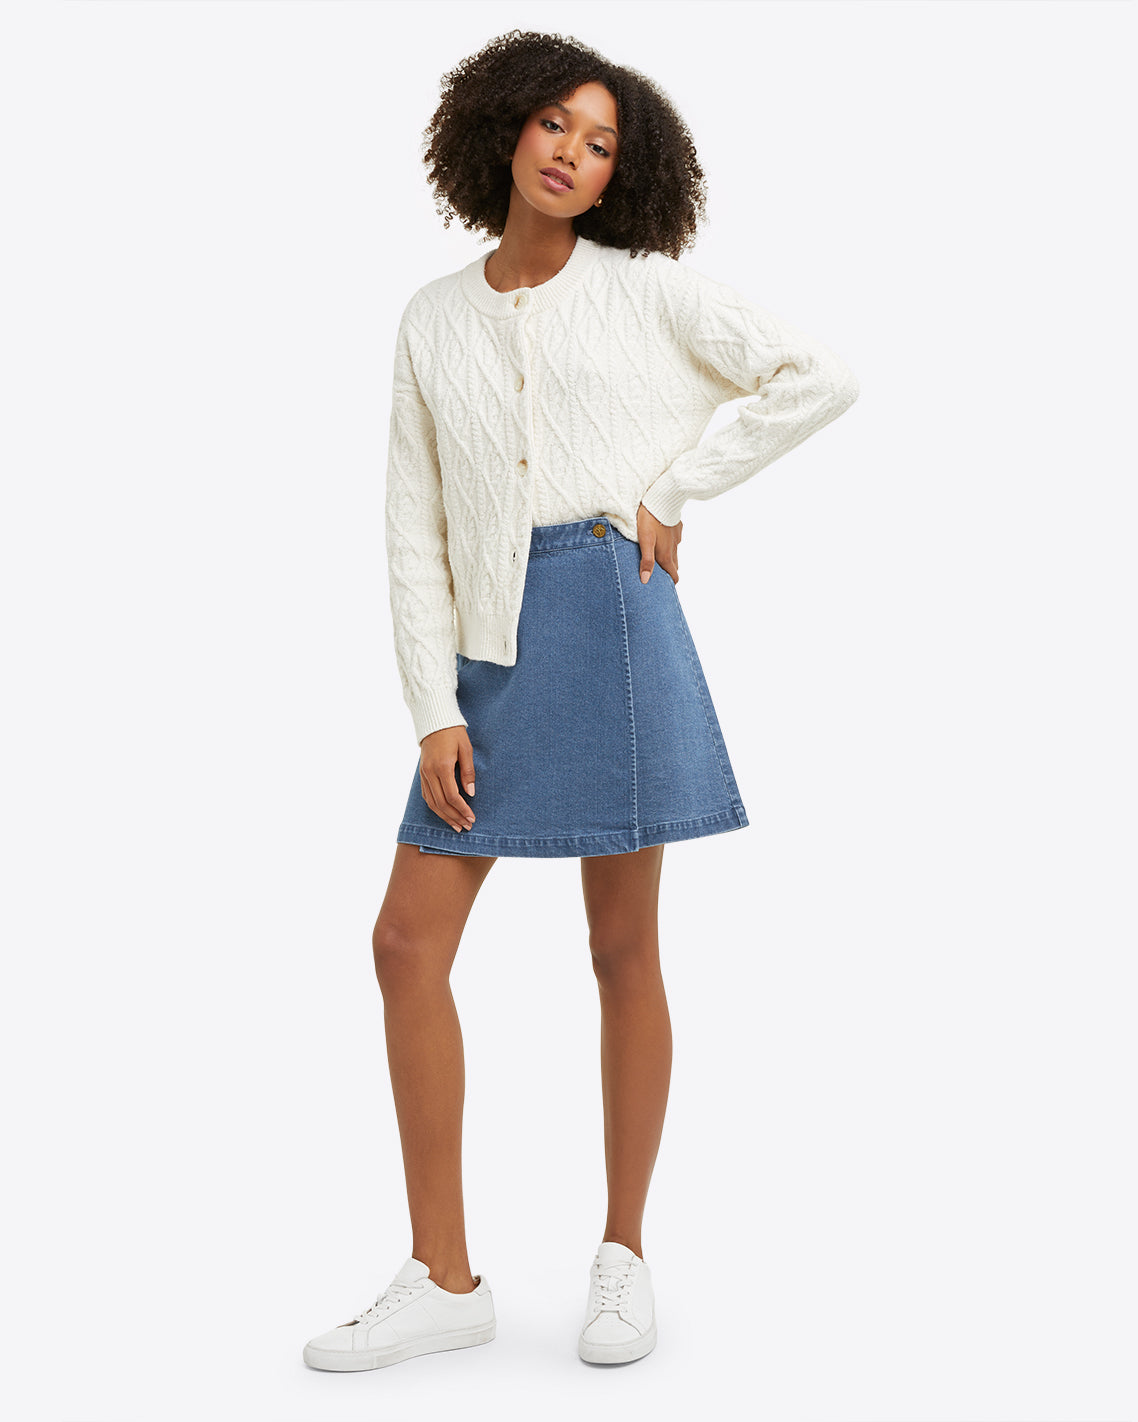 Madame Blue Front Slit A-Line Denim Skirt | Buy COLOR Navy Skirt Online for  | Glamly